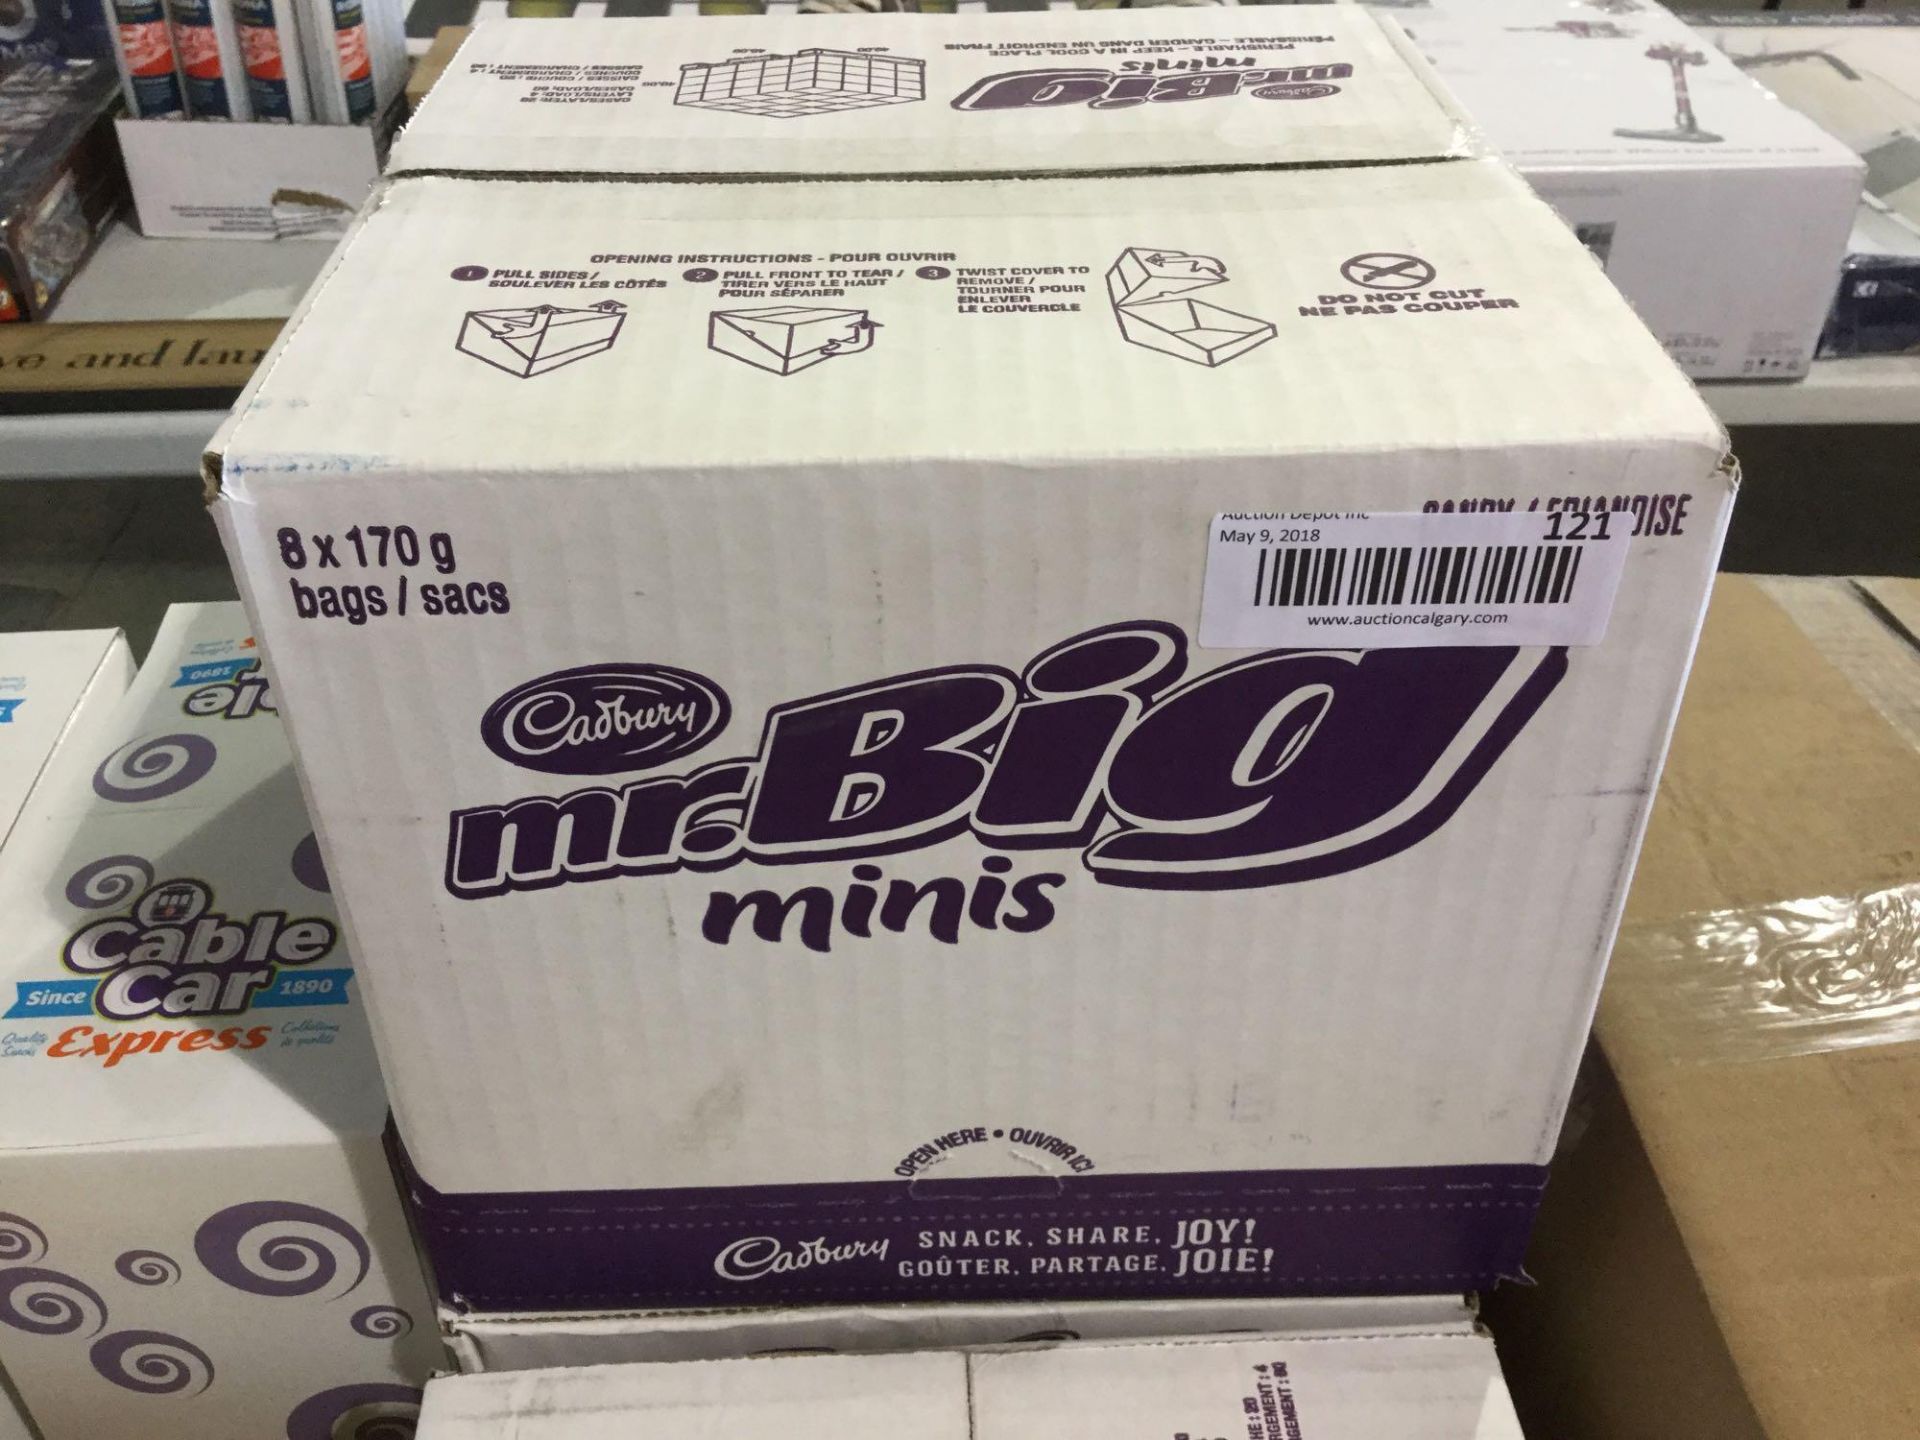 Case of Cadbury Mr. Big Mini's (8 x 170g)